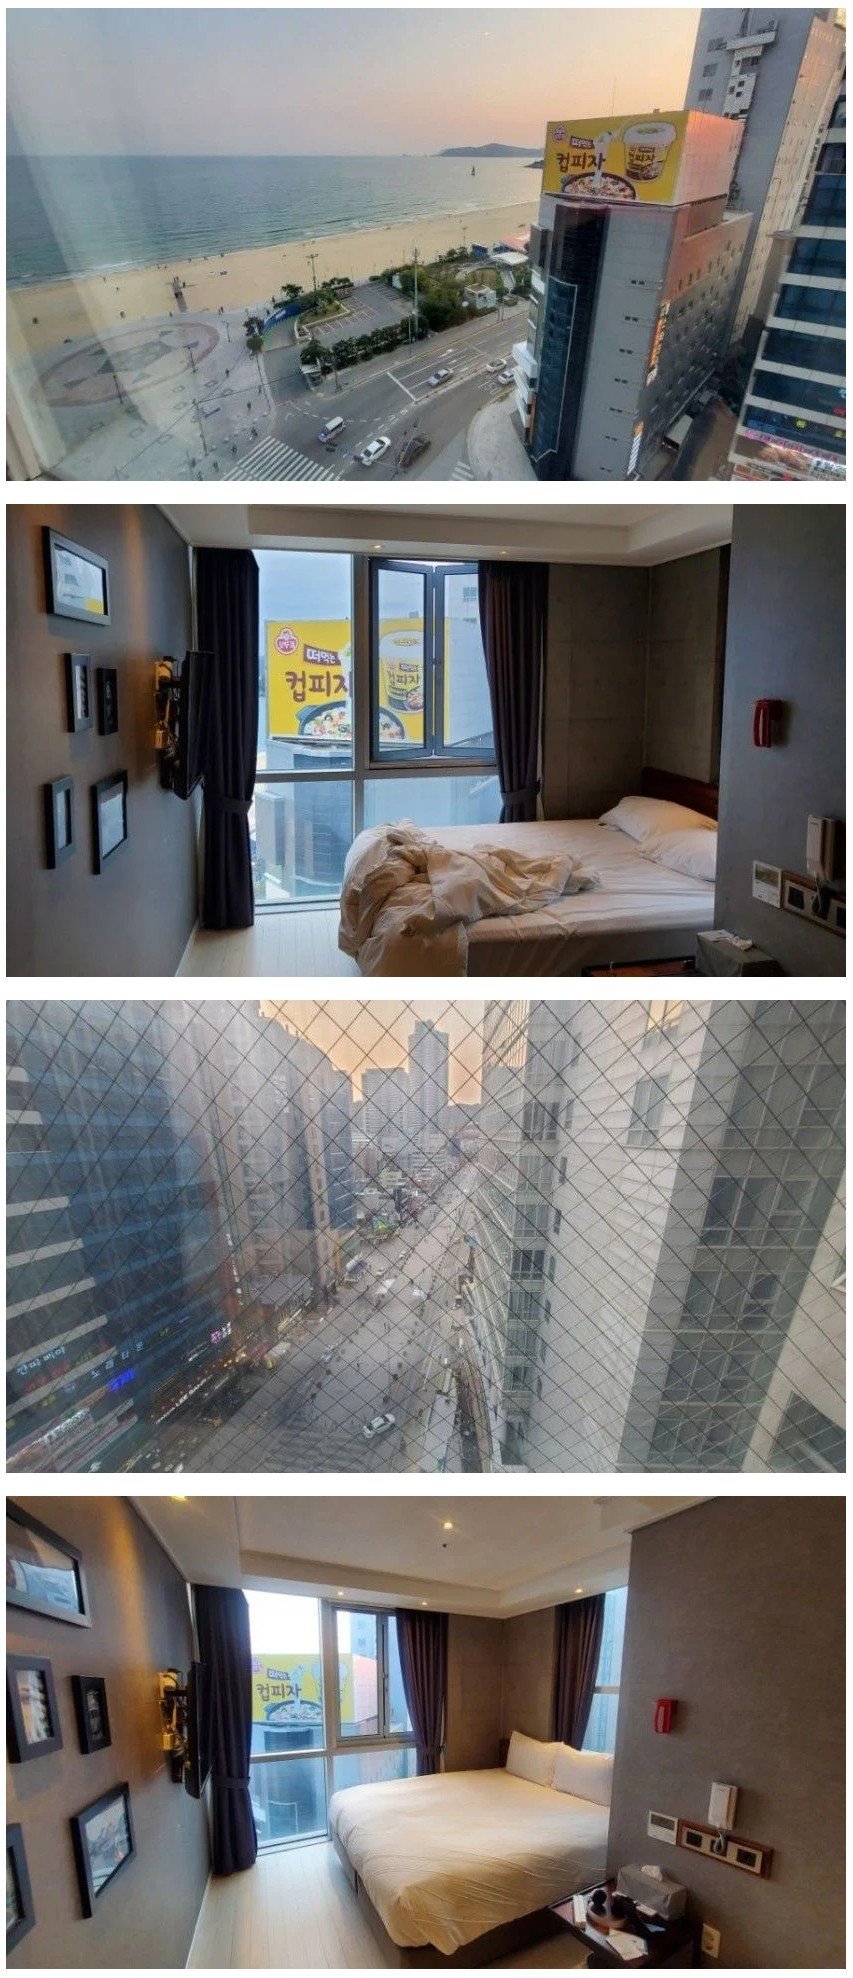 Busan Hotel Ocean View for 40,000 won